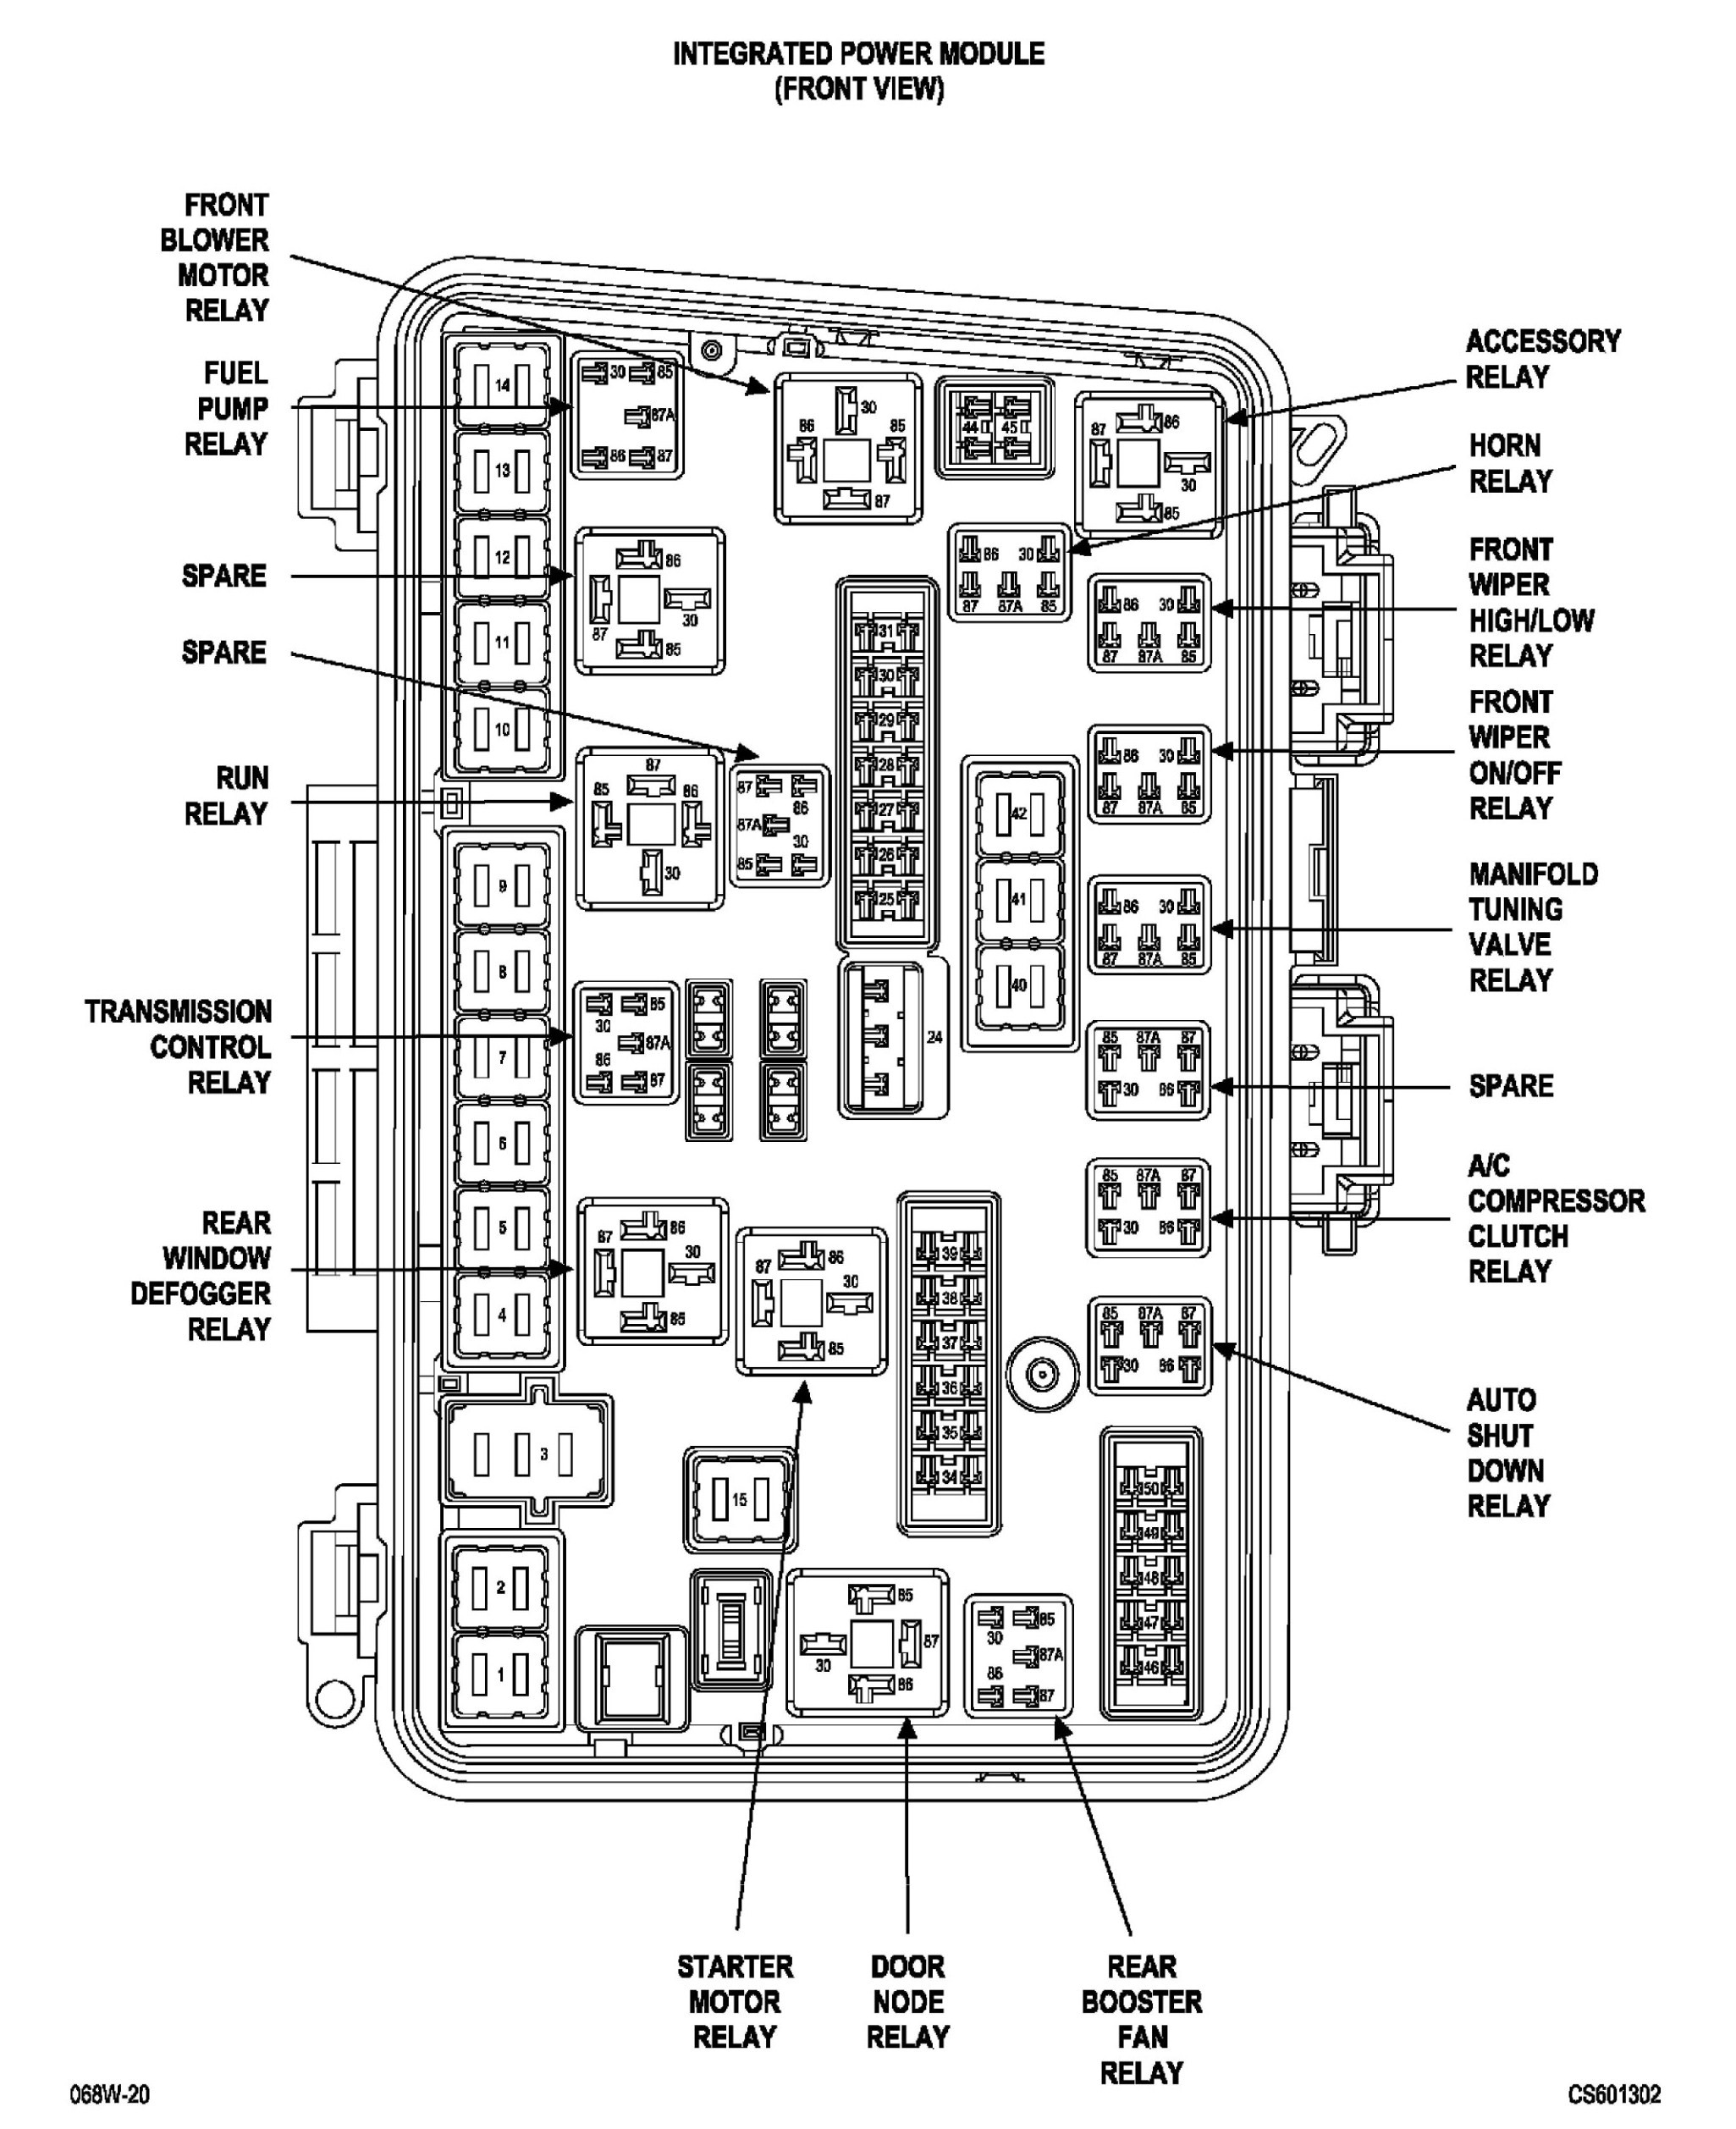 Ford F250 Interior Fuse Box Diagram Wiring Diagram